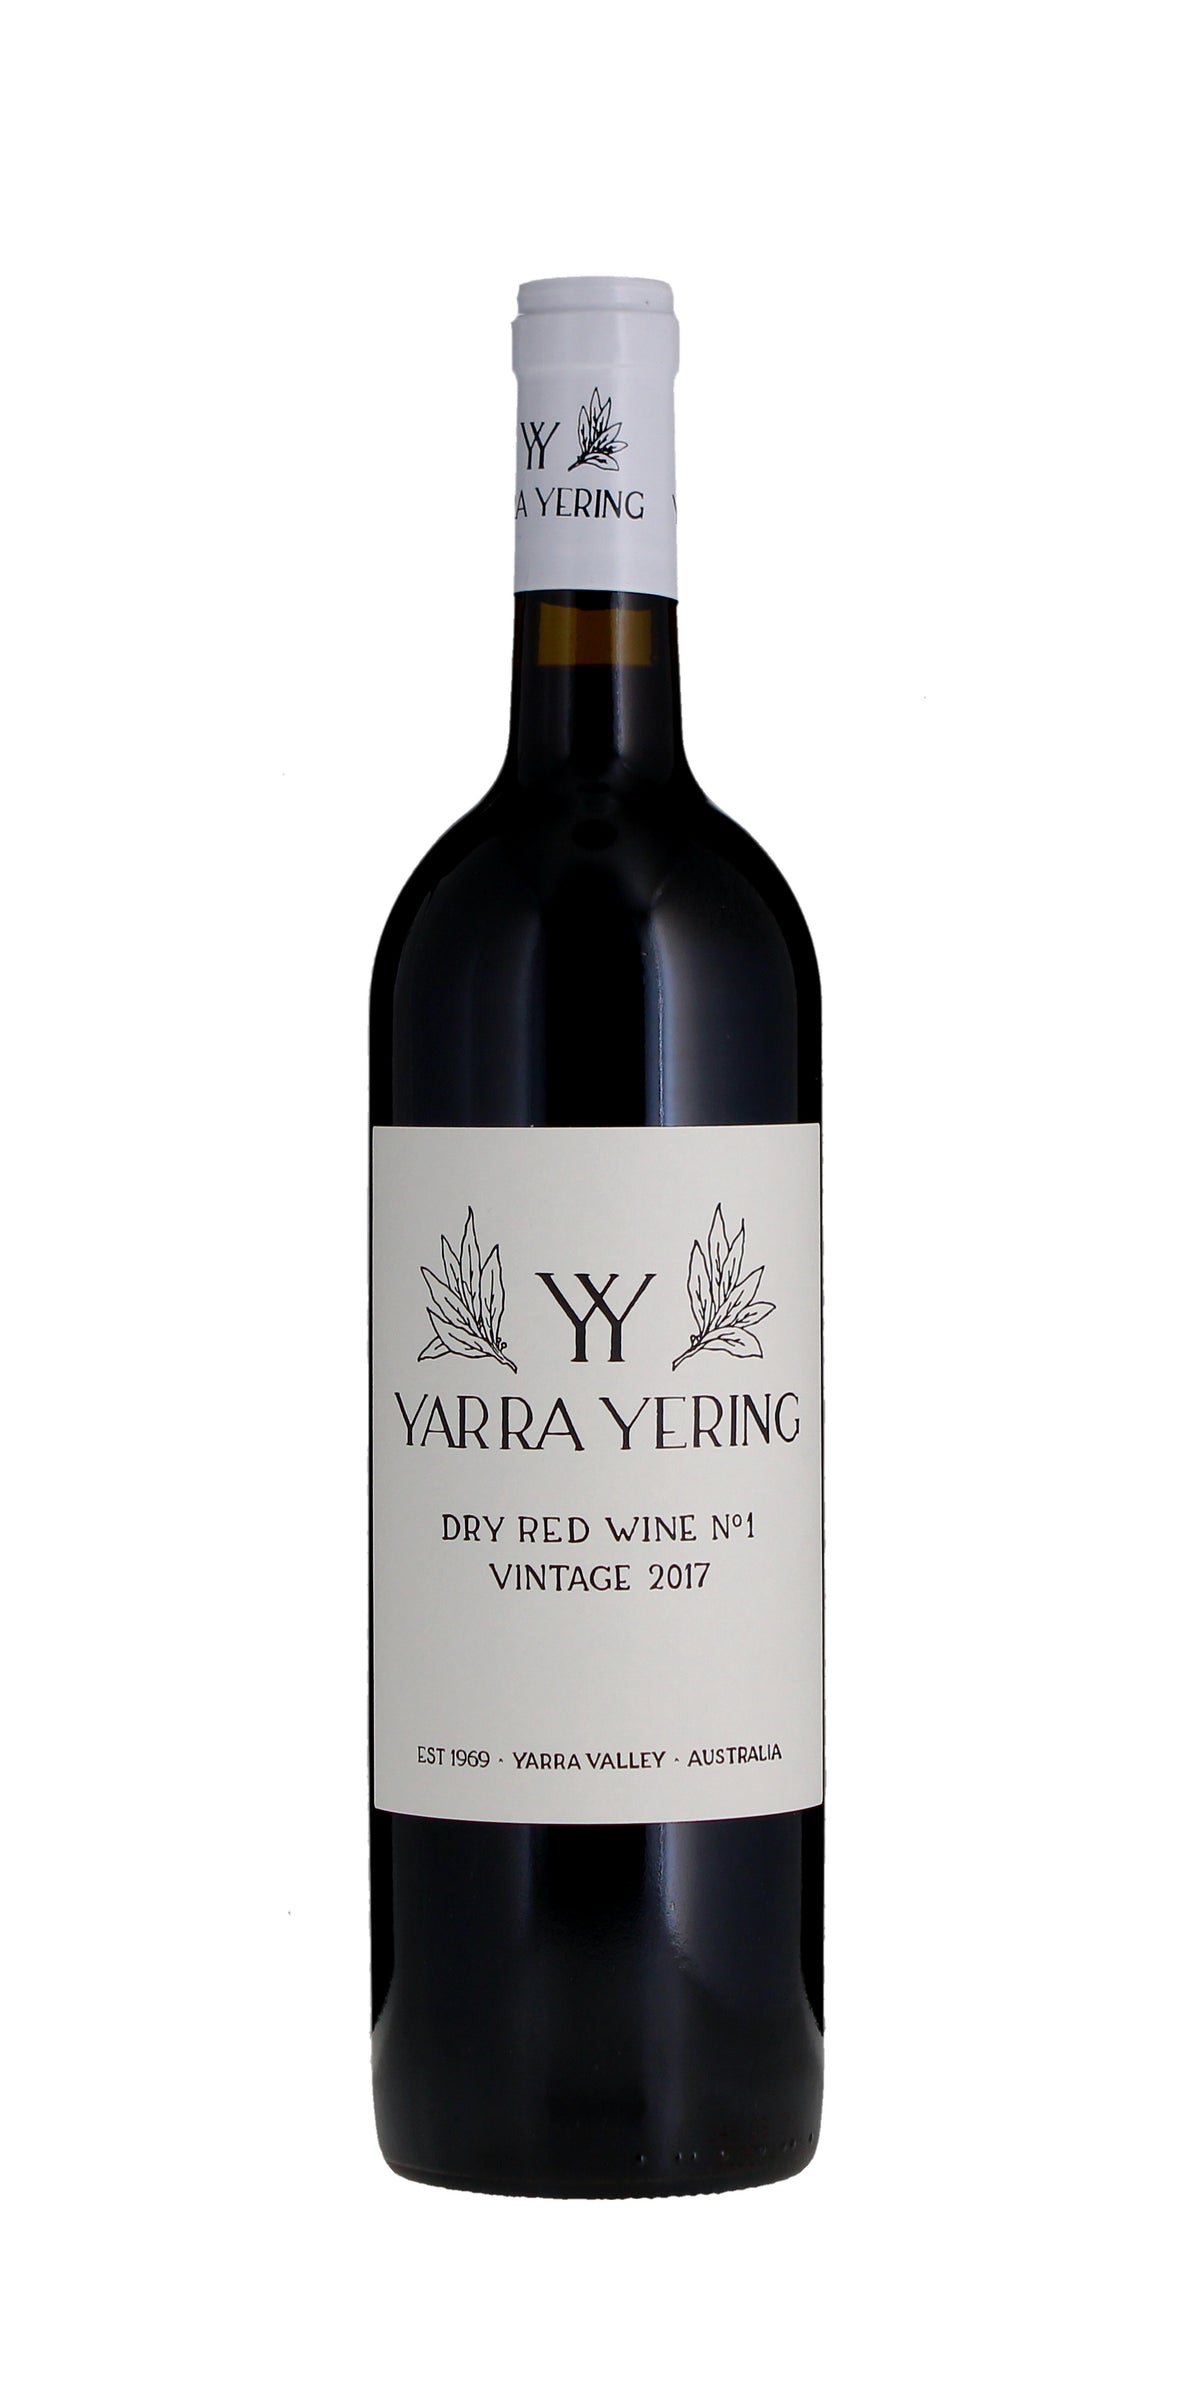 Yarra Yering, Dry Red Wine No1, 2017